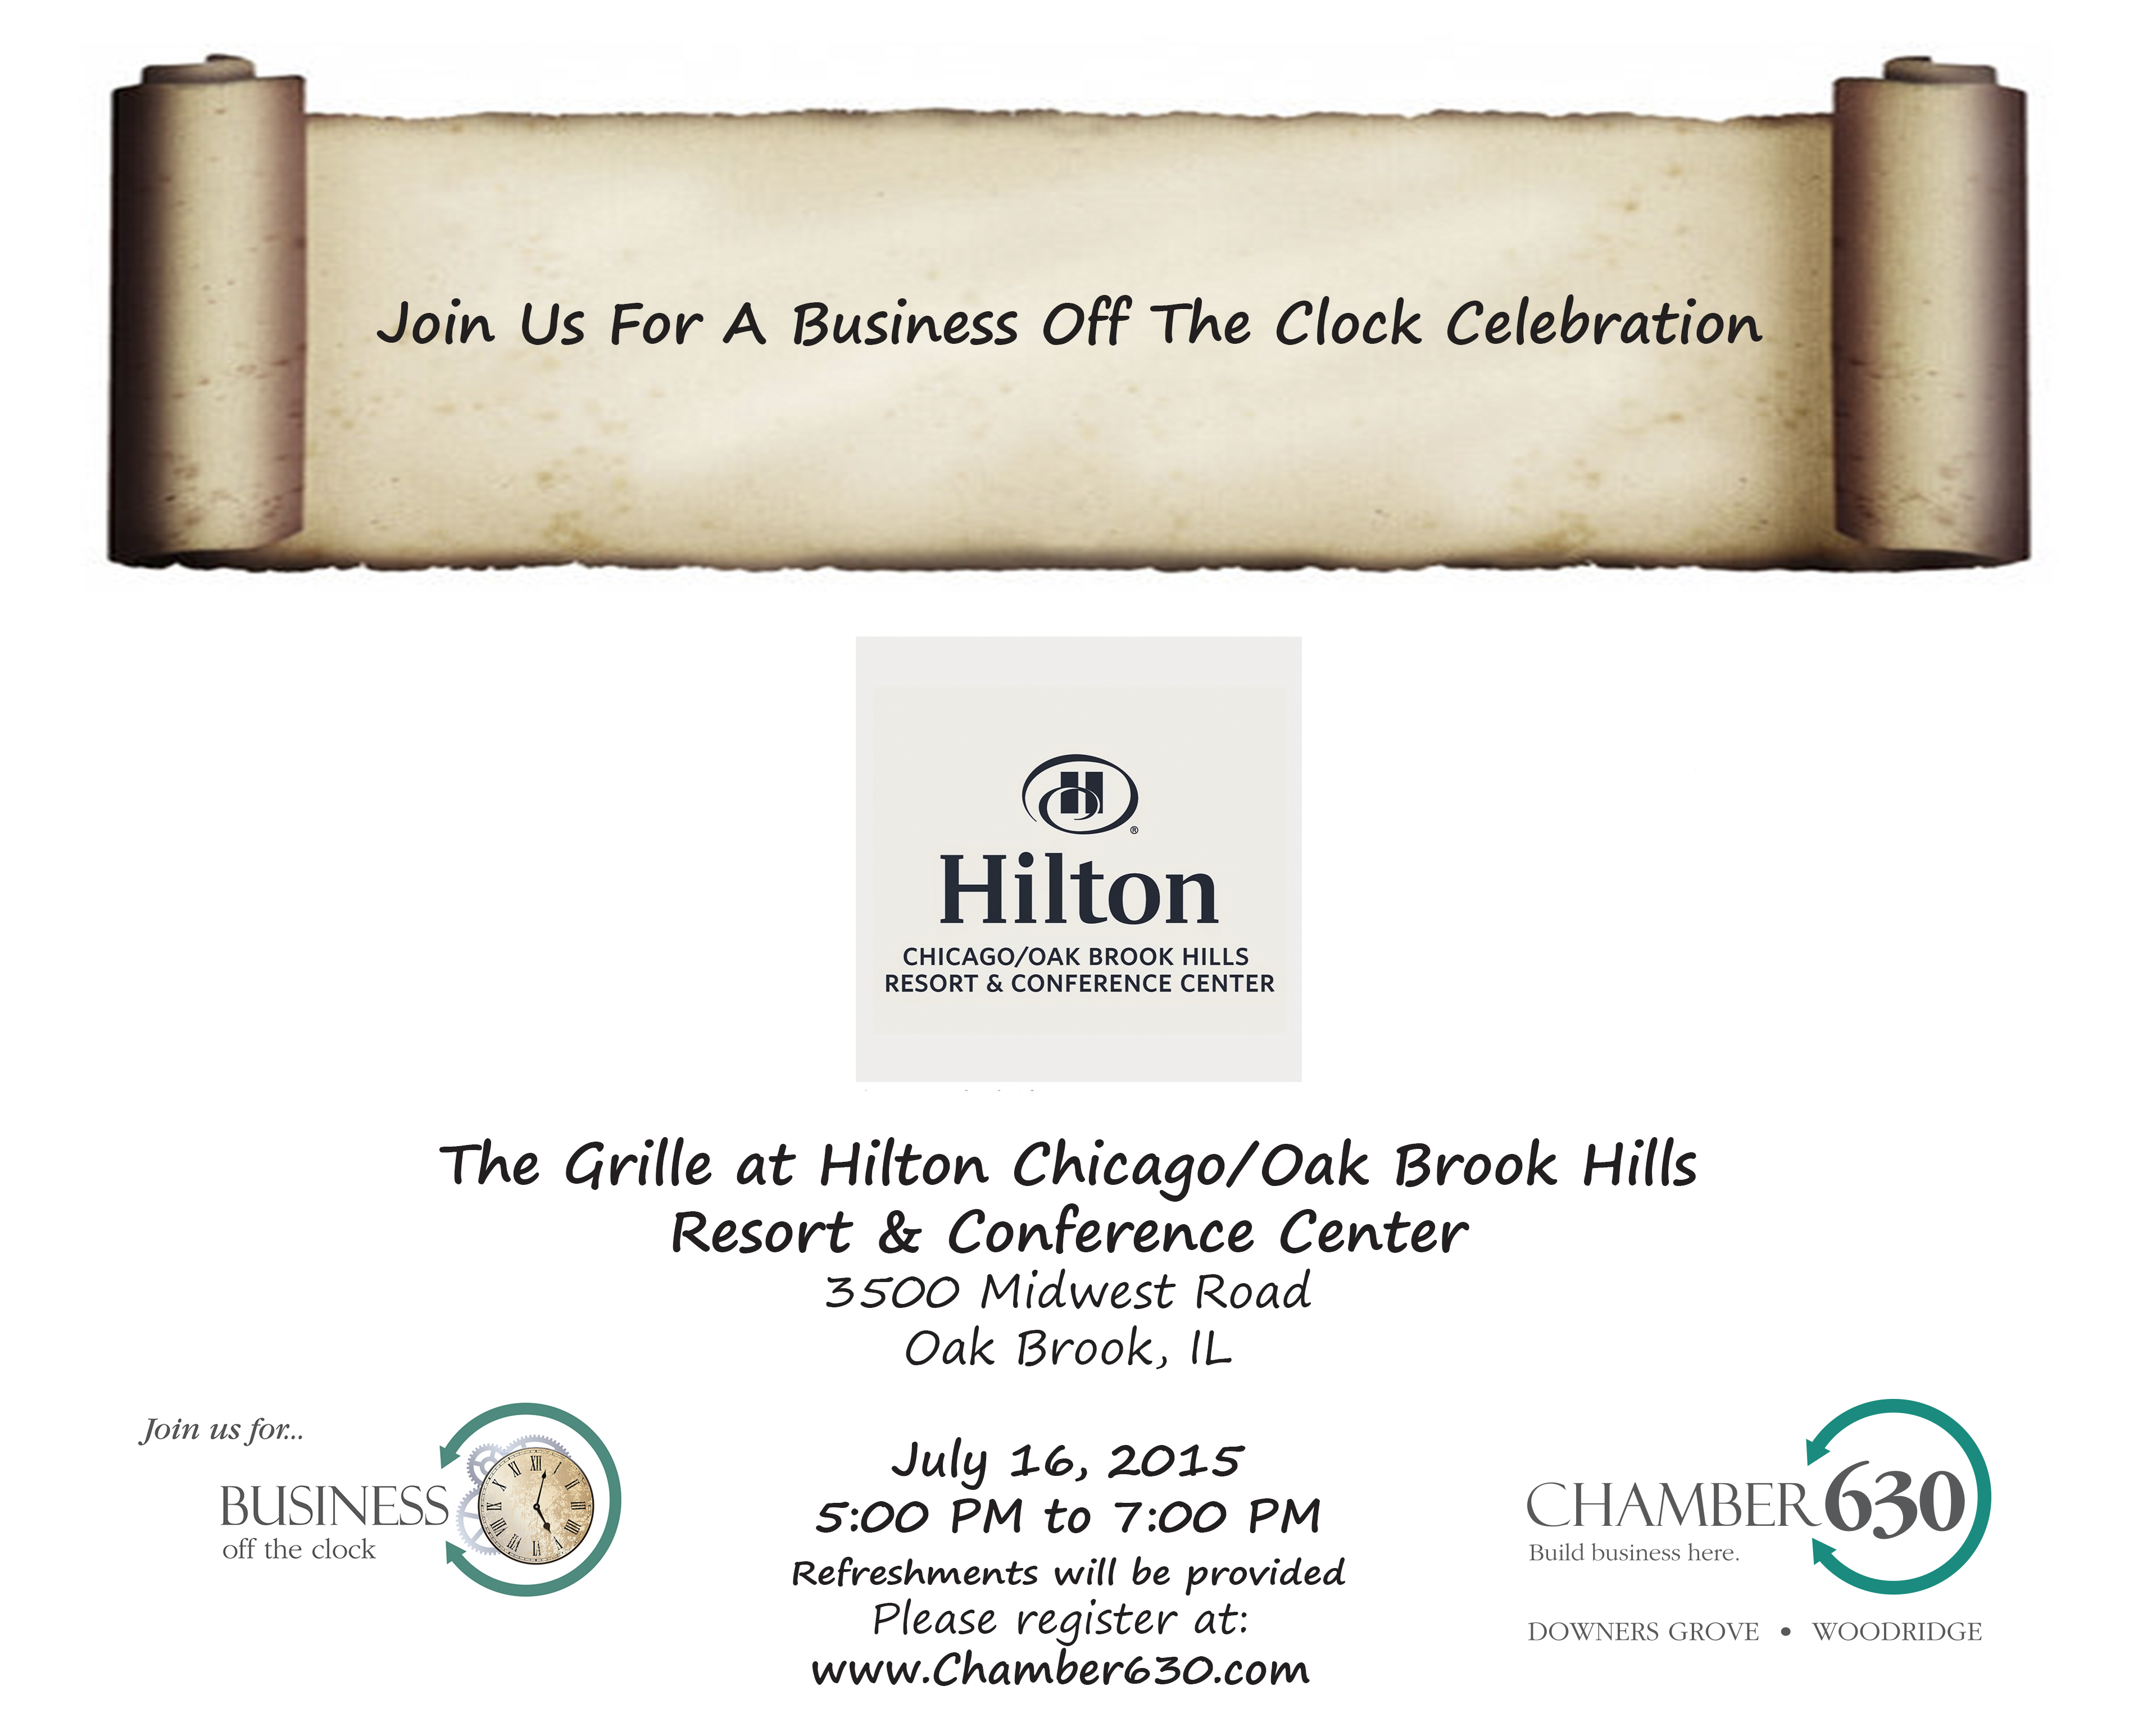 The Grille at Hilton Chicago Oak Brook Hills Resort & Conference Center BOTC